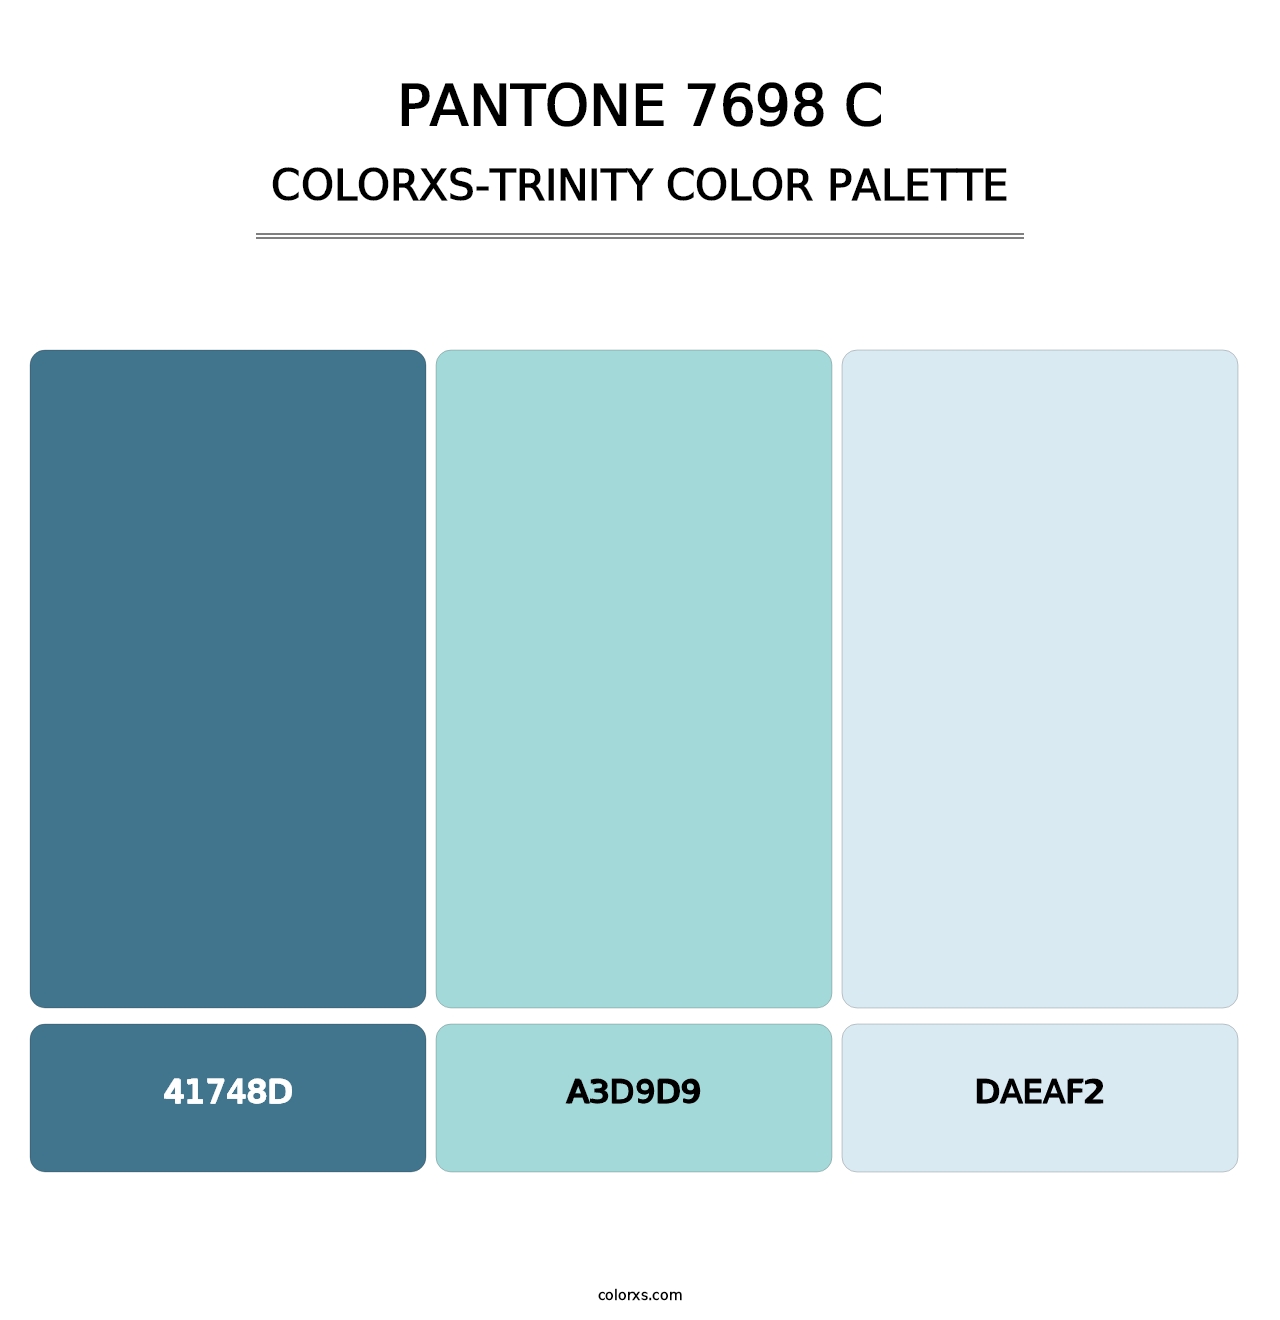 PANTONE 7698 C - Colorxs Trinity Palette